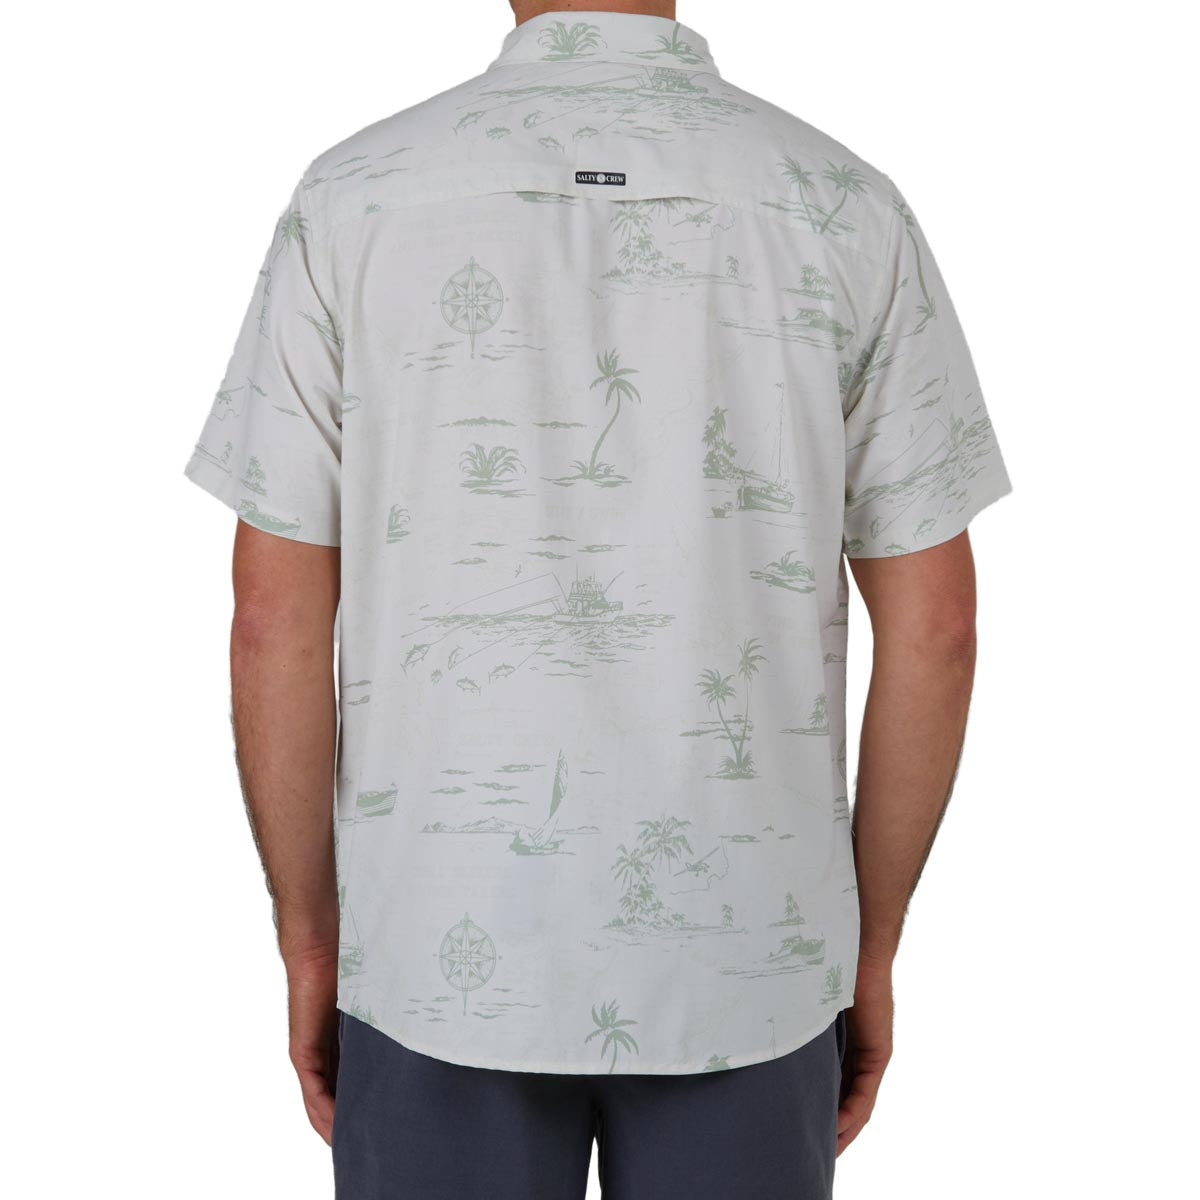 Salty Crew Seafarer Tech Woven Shirt - Wax image 2